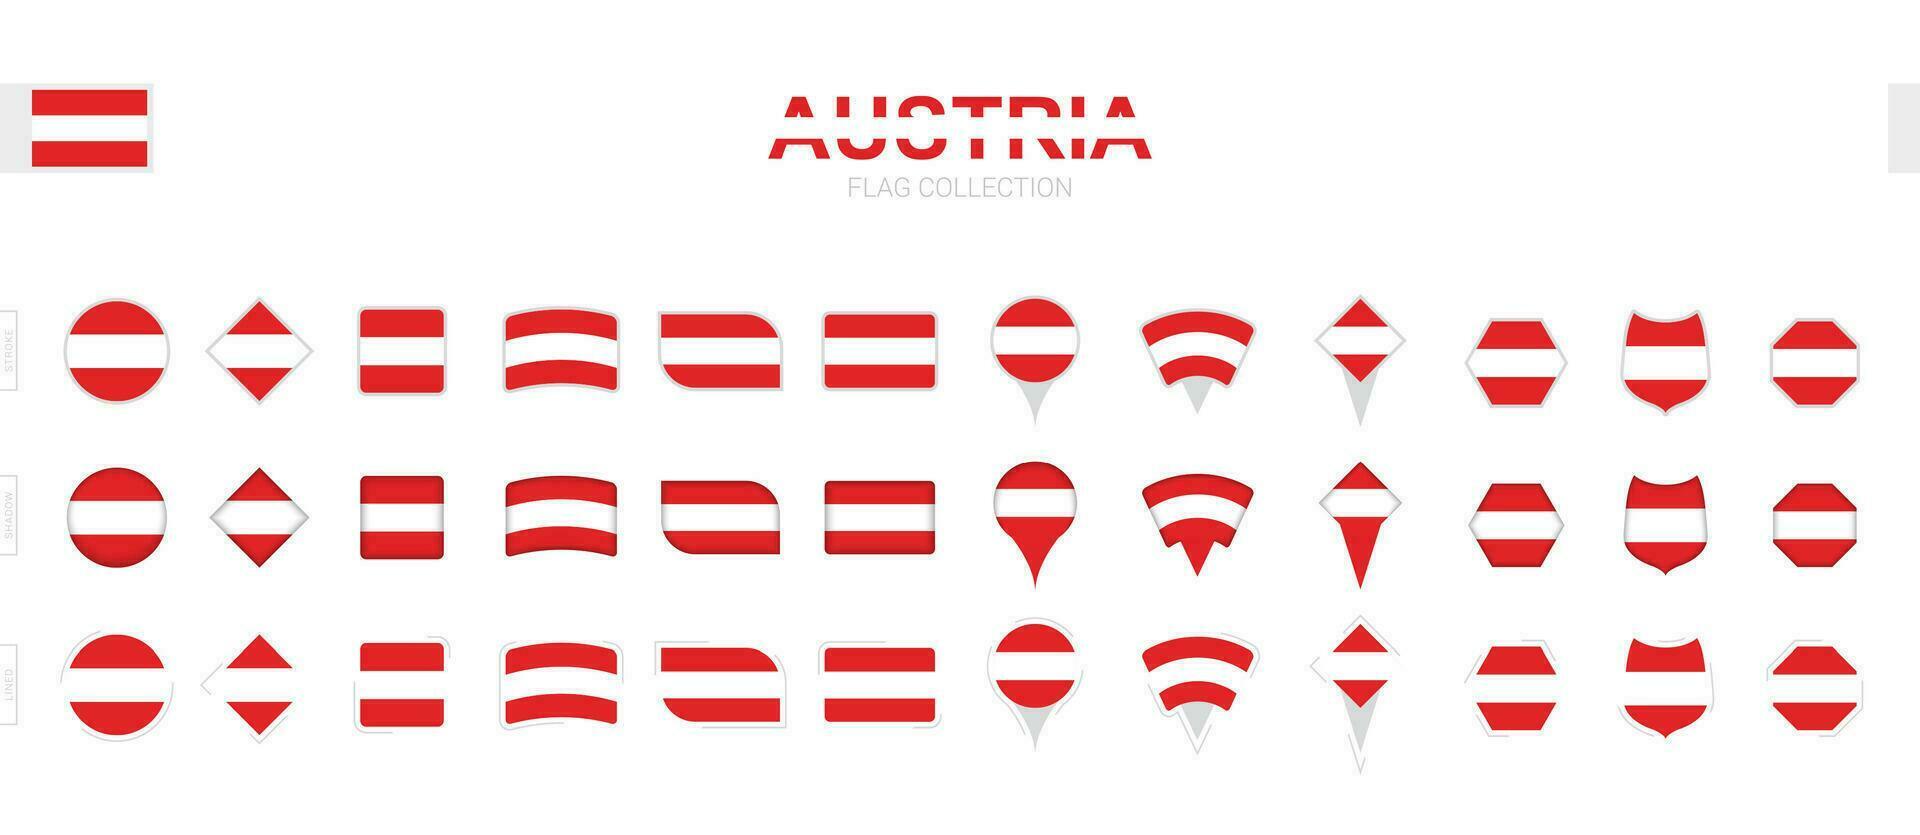 stor samling av österrike flaggor av olika former och effekter. vektor